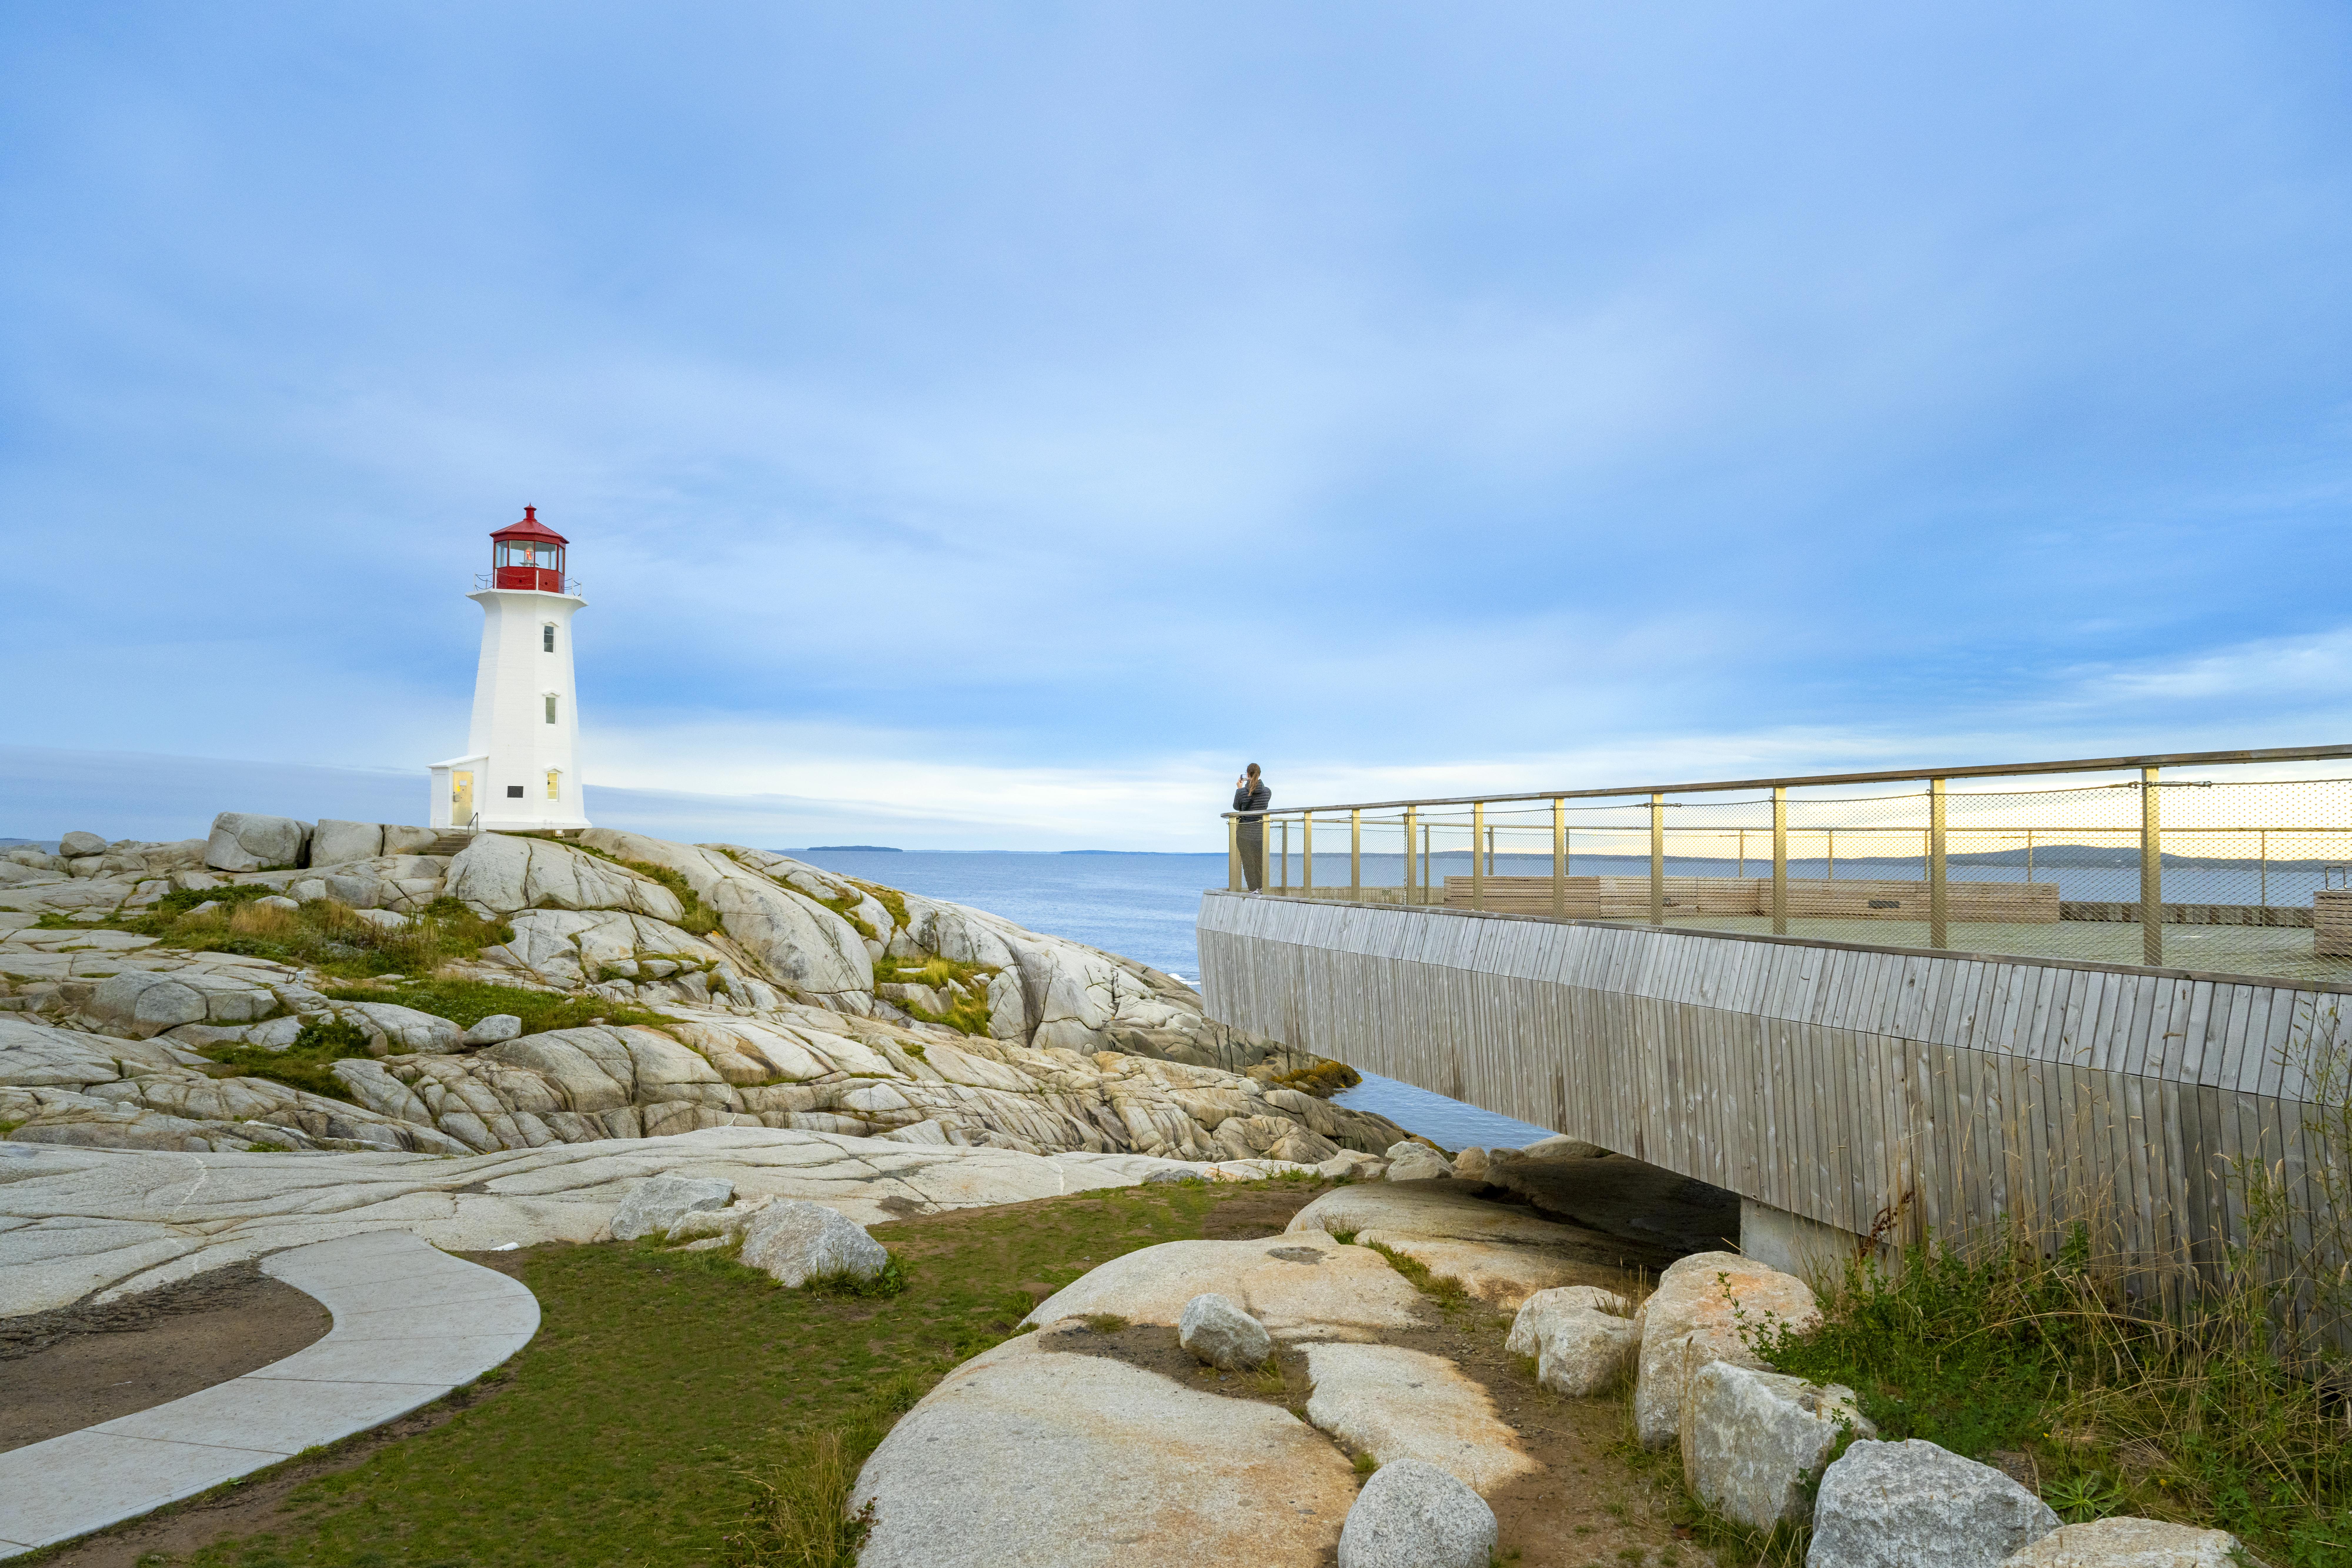 Peggy’s Cove has become an emblem of Nova Scotia’s wild and beautiful coast